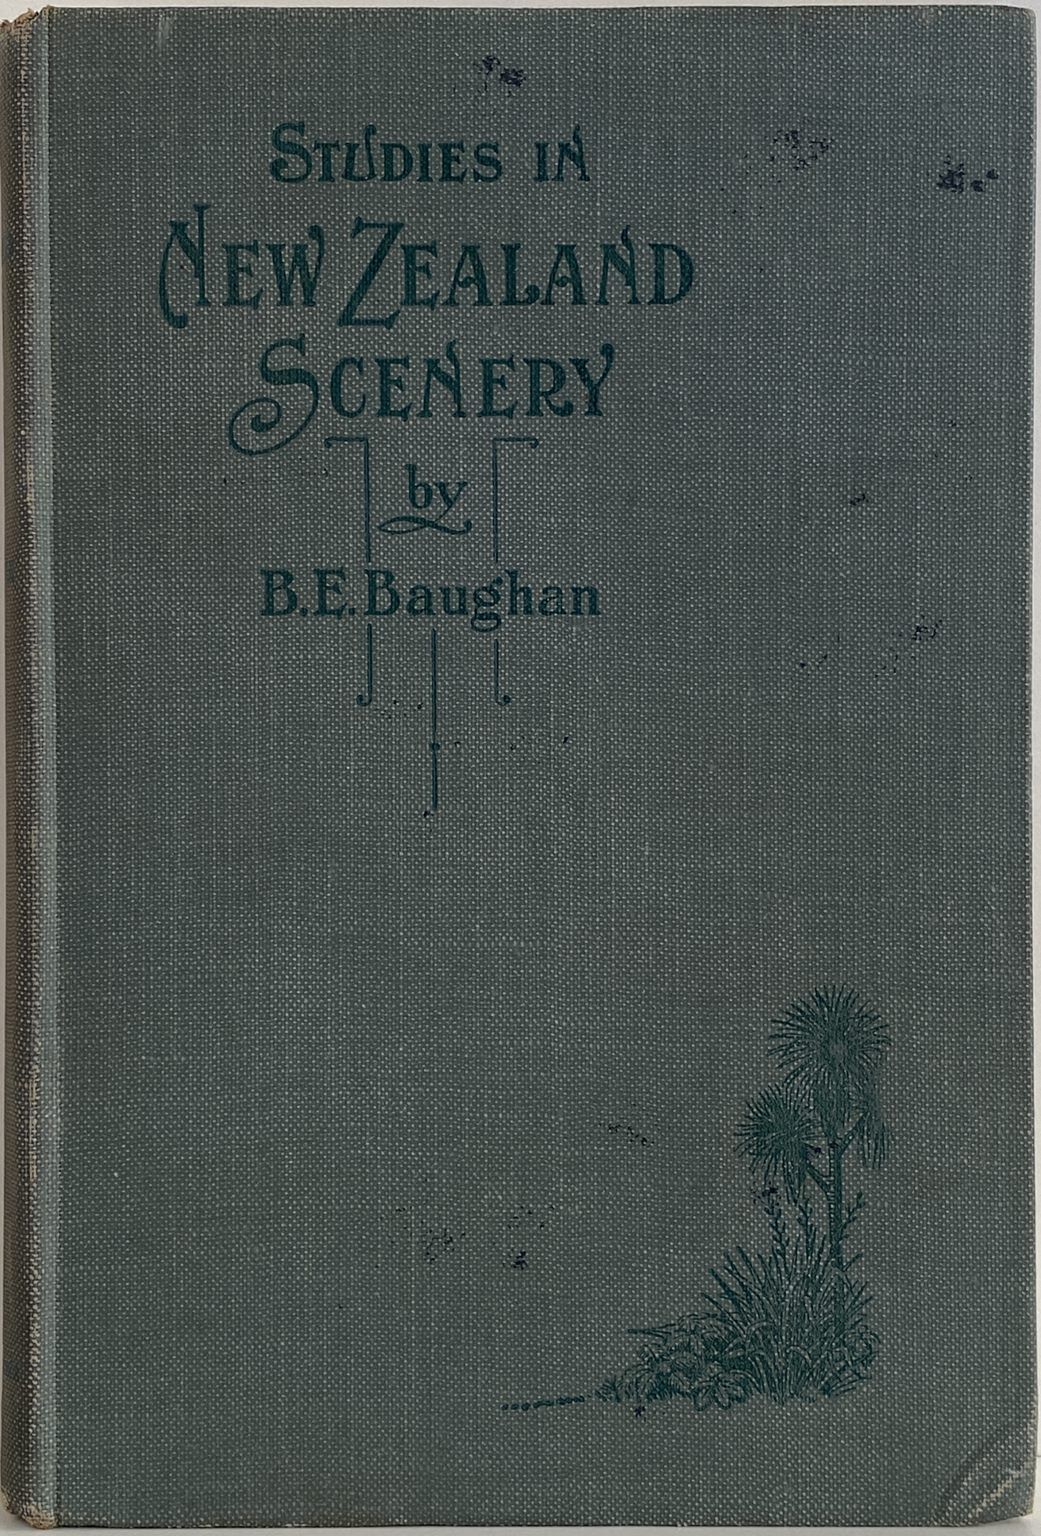 STUDIES IN NEW ZEALAND SCENERY